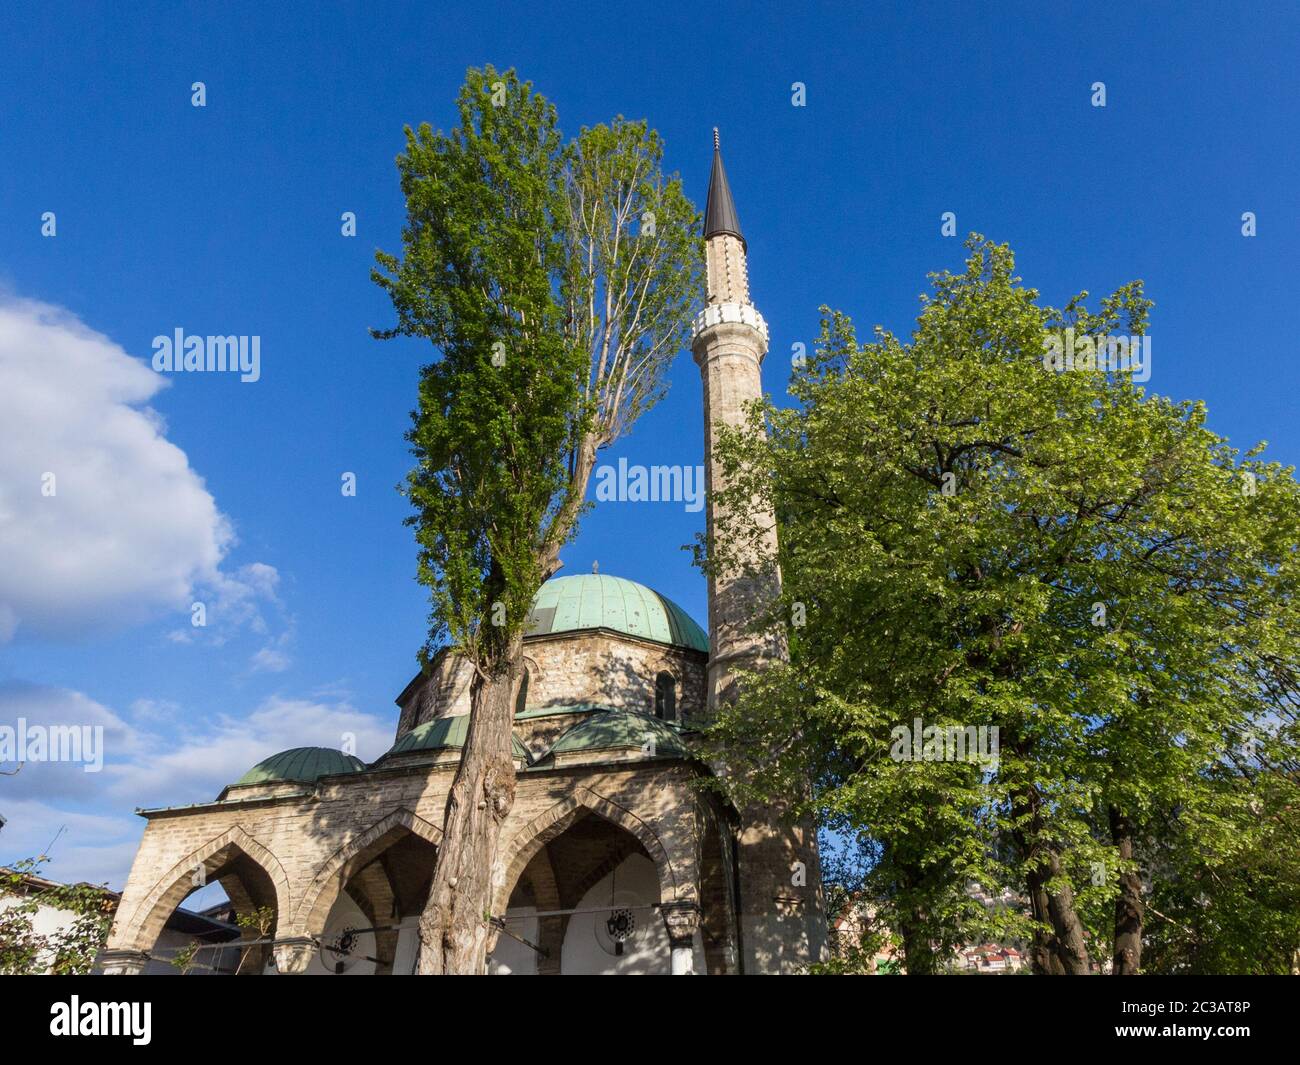 Bascarsija mosque in Sarajevo, Bosnia and Herzegovina. Also called Bascarsijska Dzamija, the mosque is one of the main landmarks of the ottoman part o Stock Photo